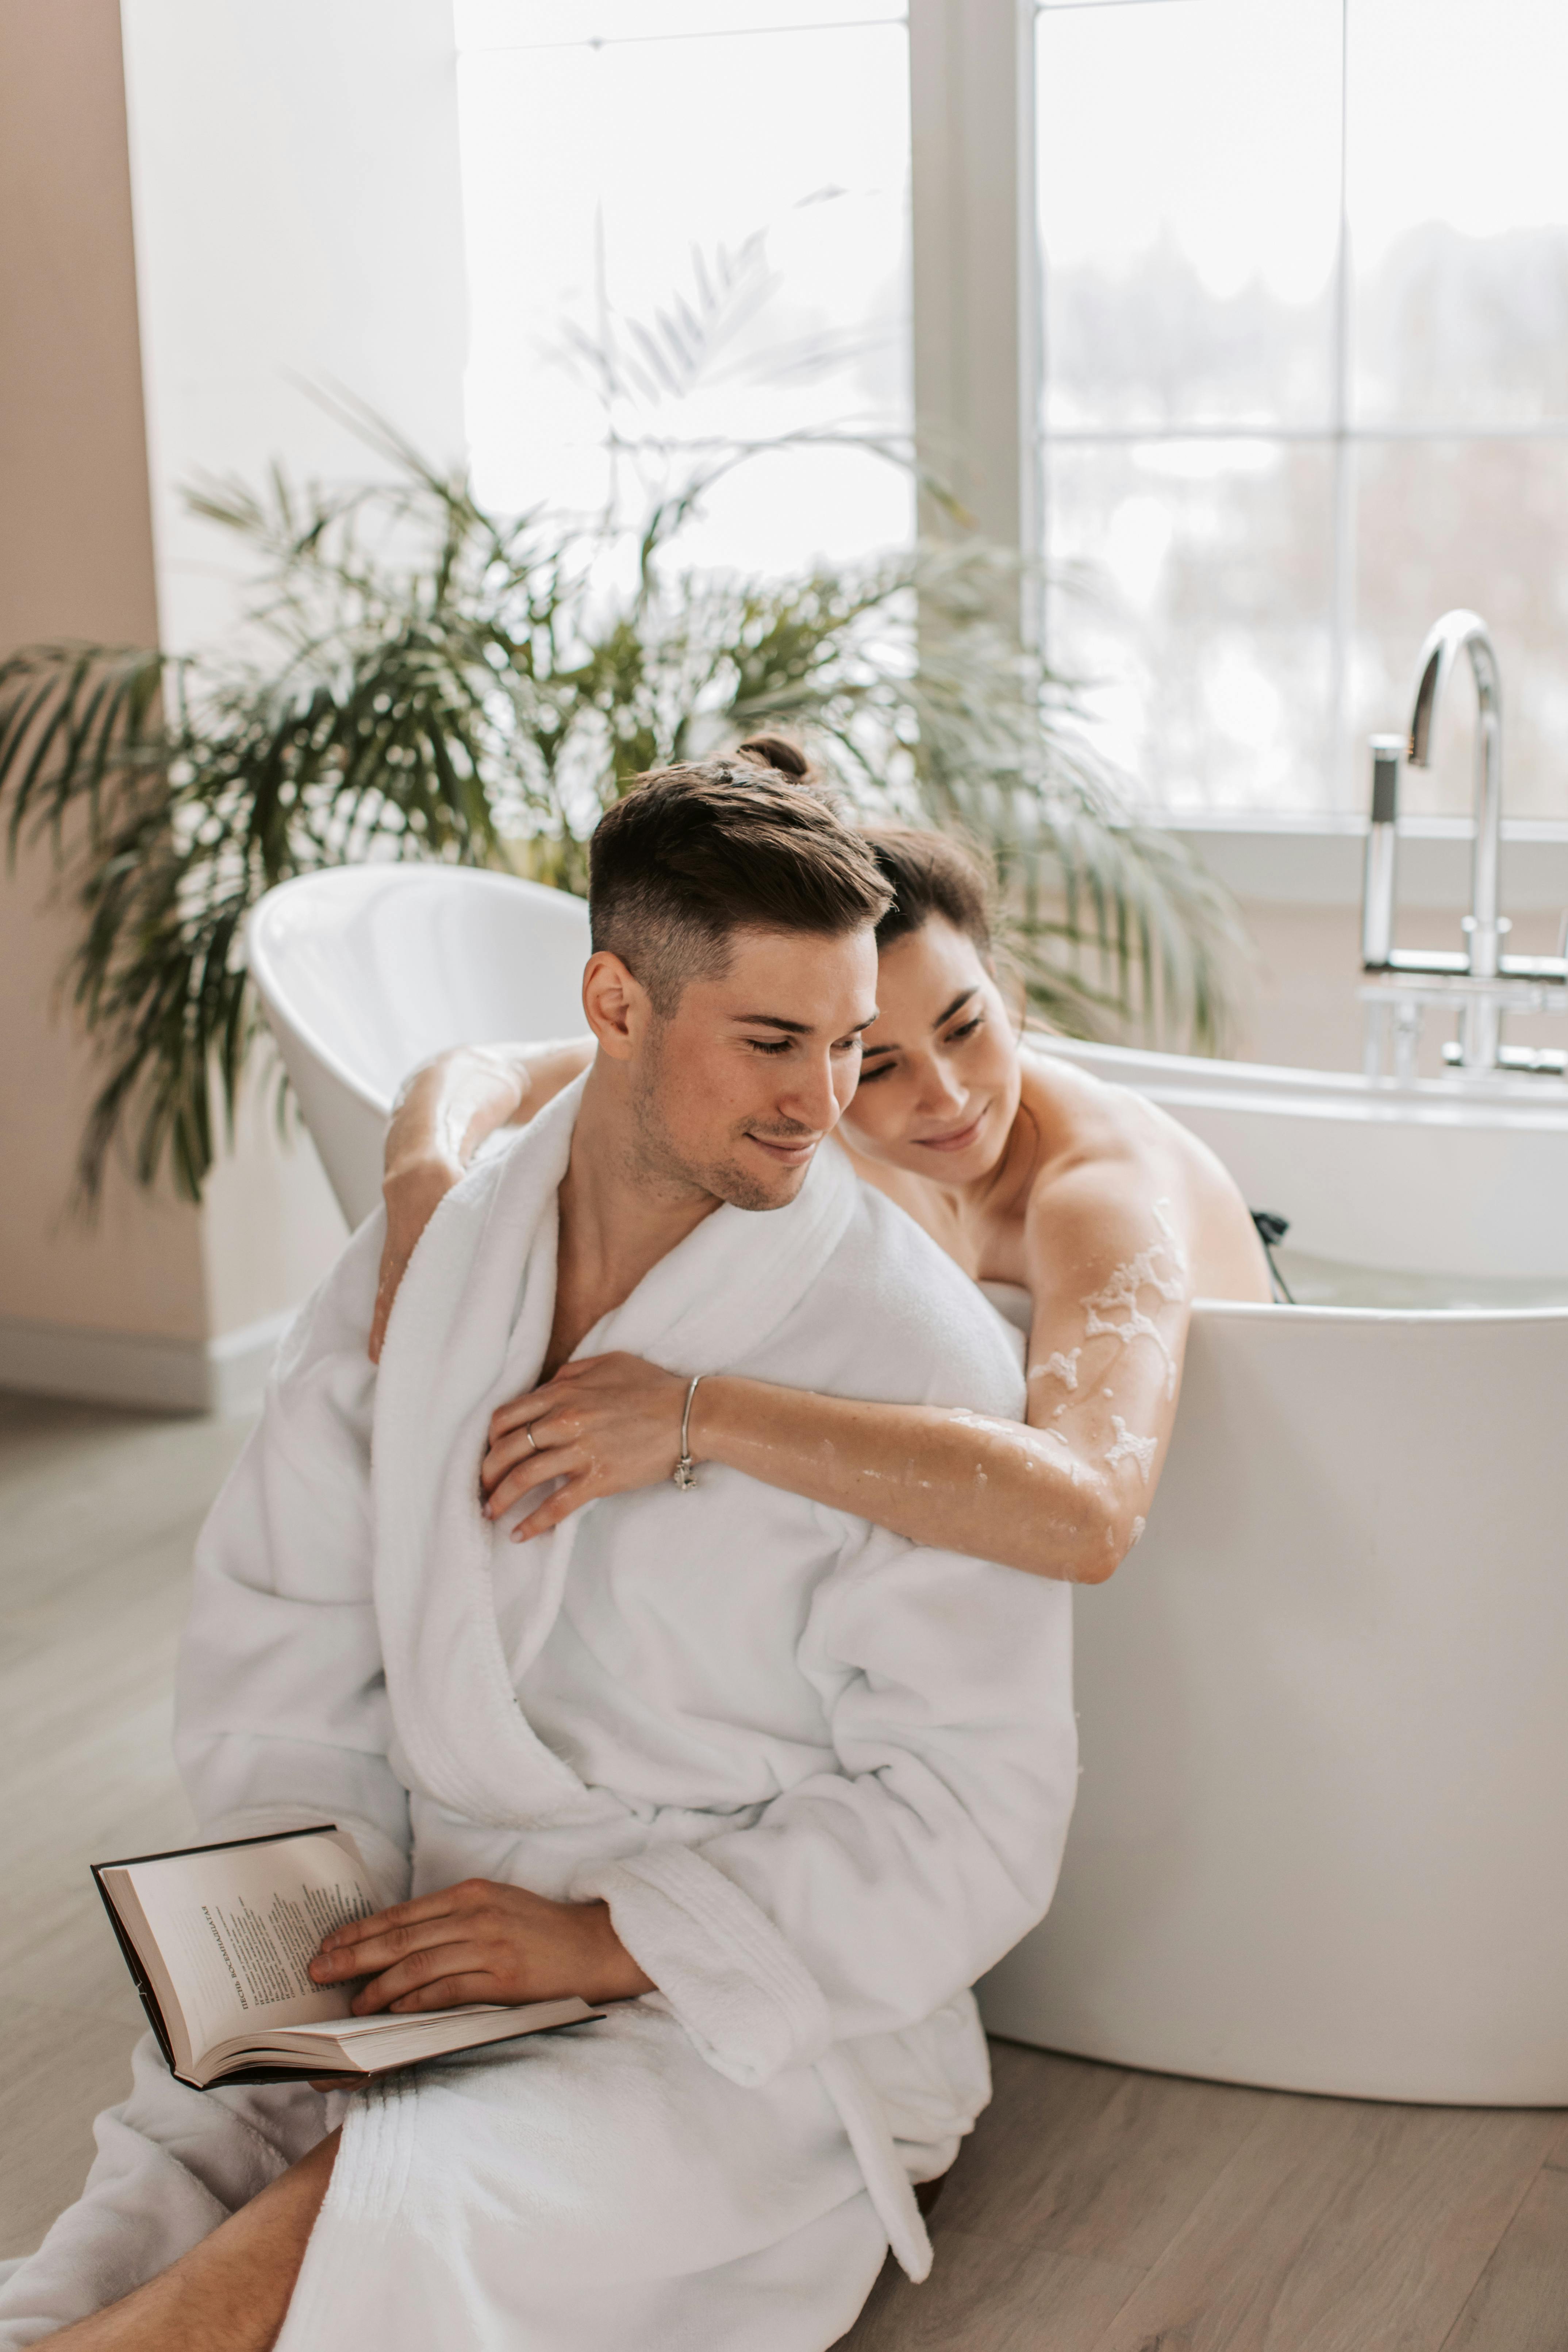 Man Sitting Beside A Bathtub With A Woman Bathing · Free Stock Photo